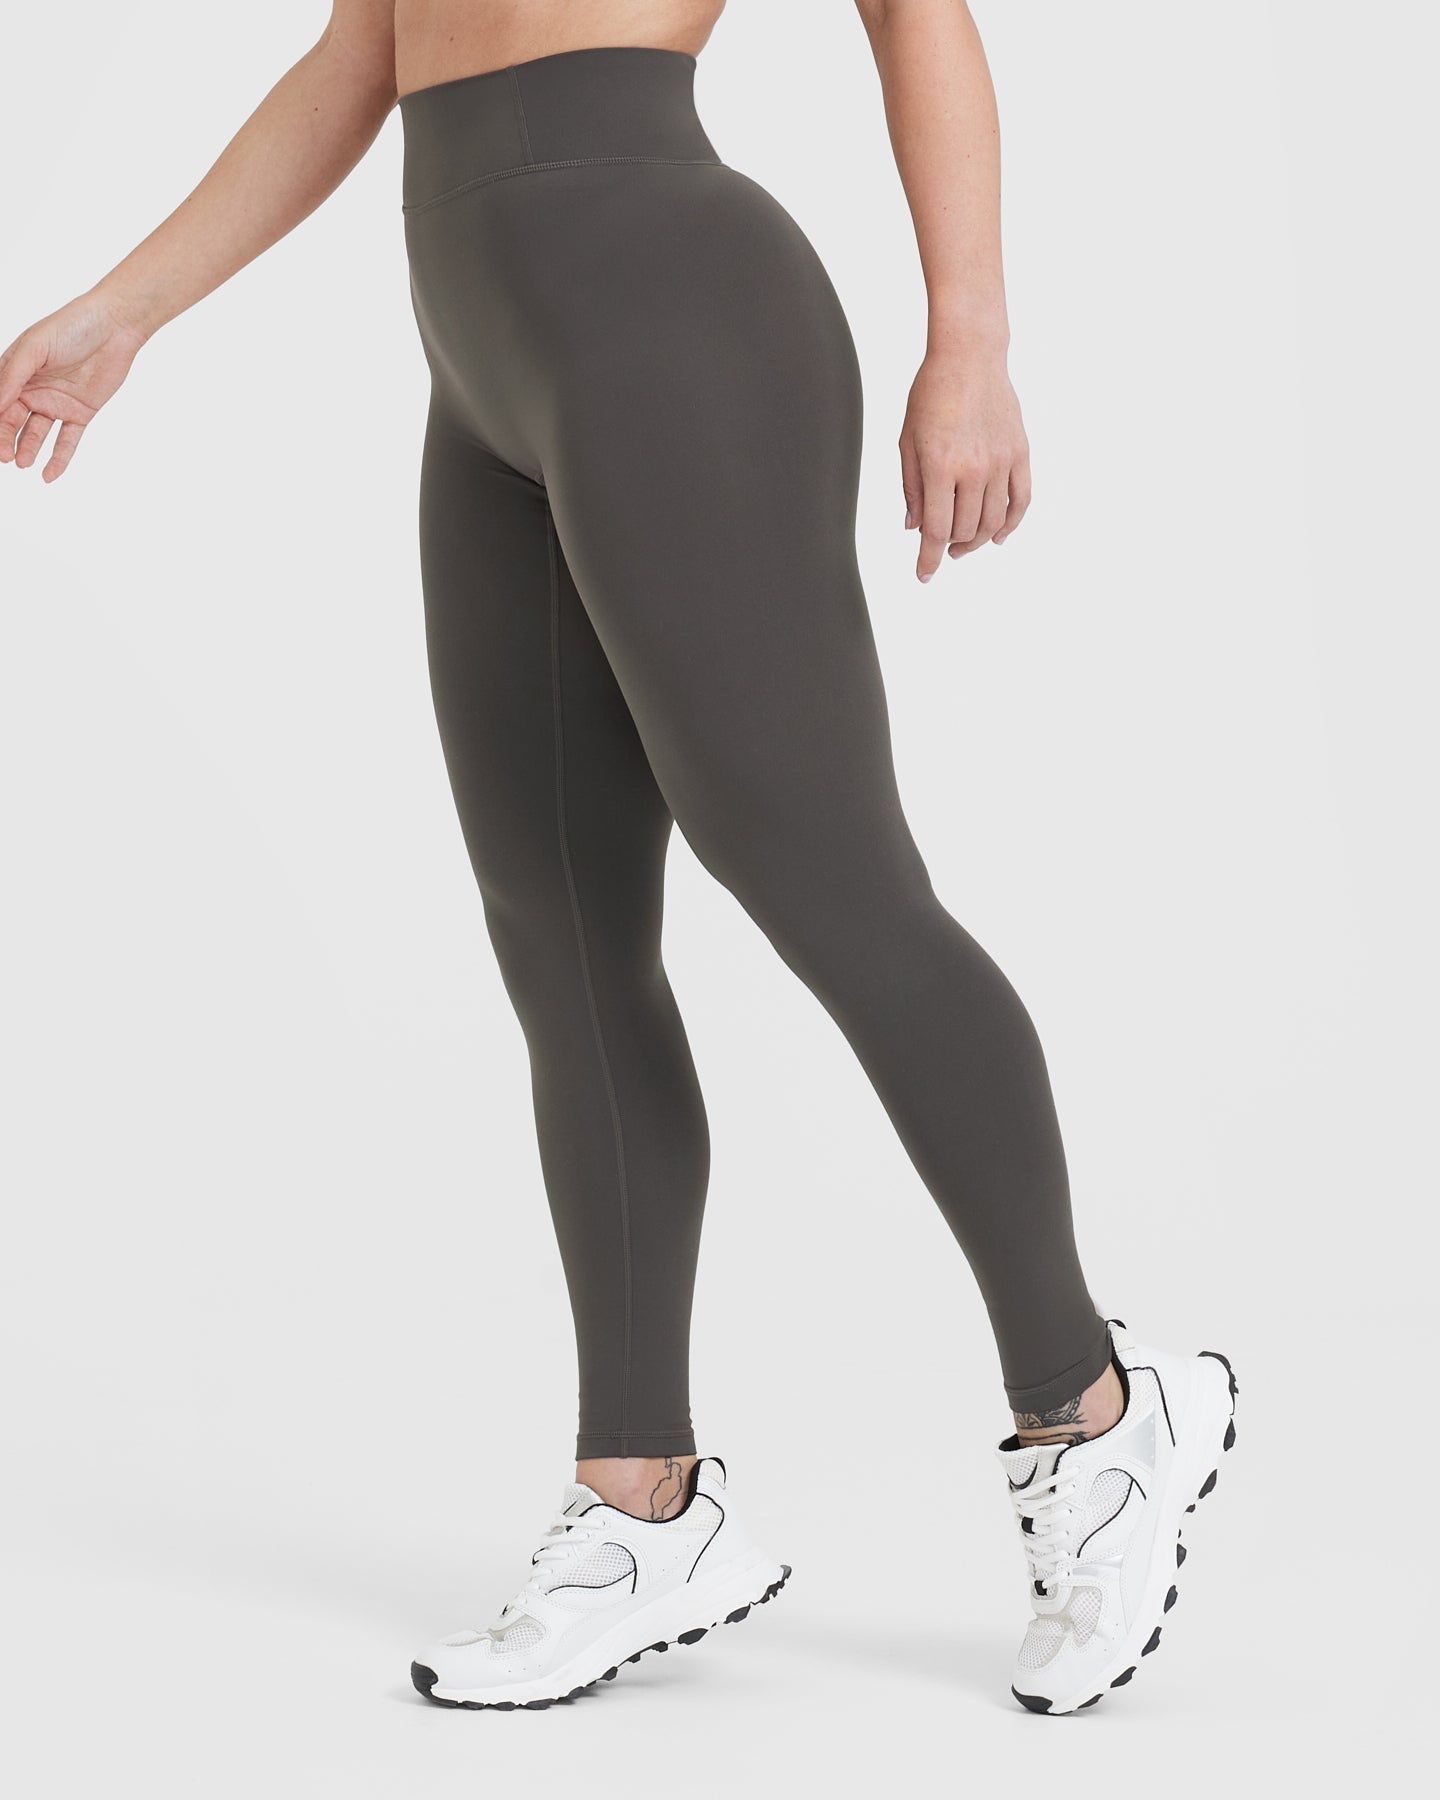 Women's high waisted sports leggings - Deep Taupe